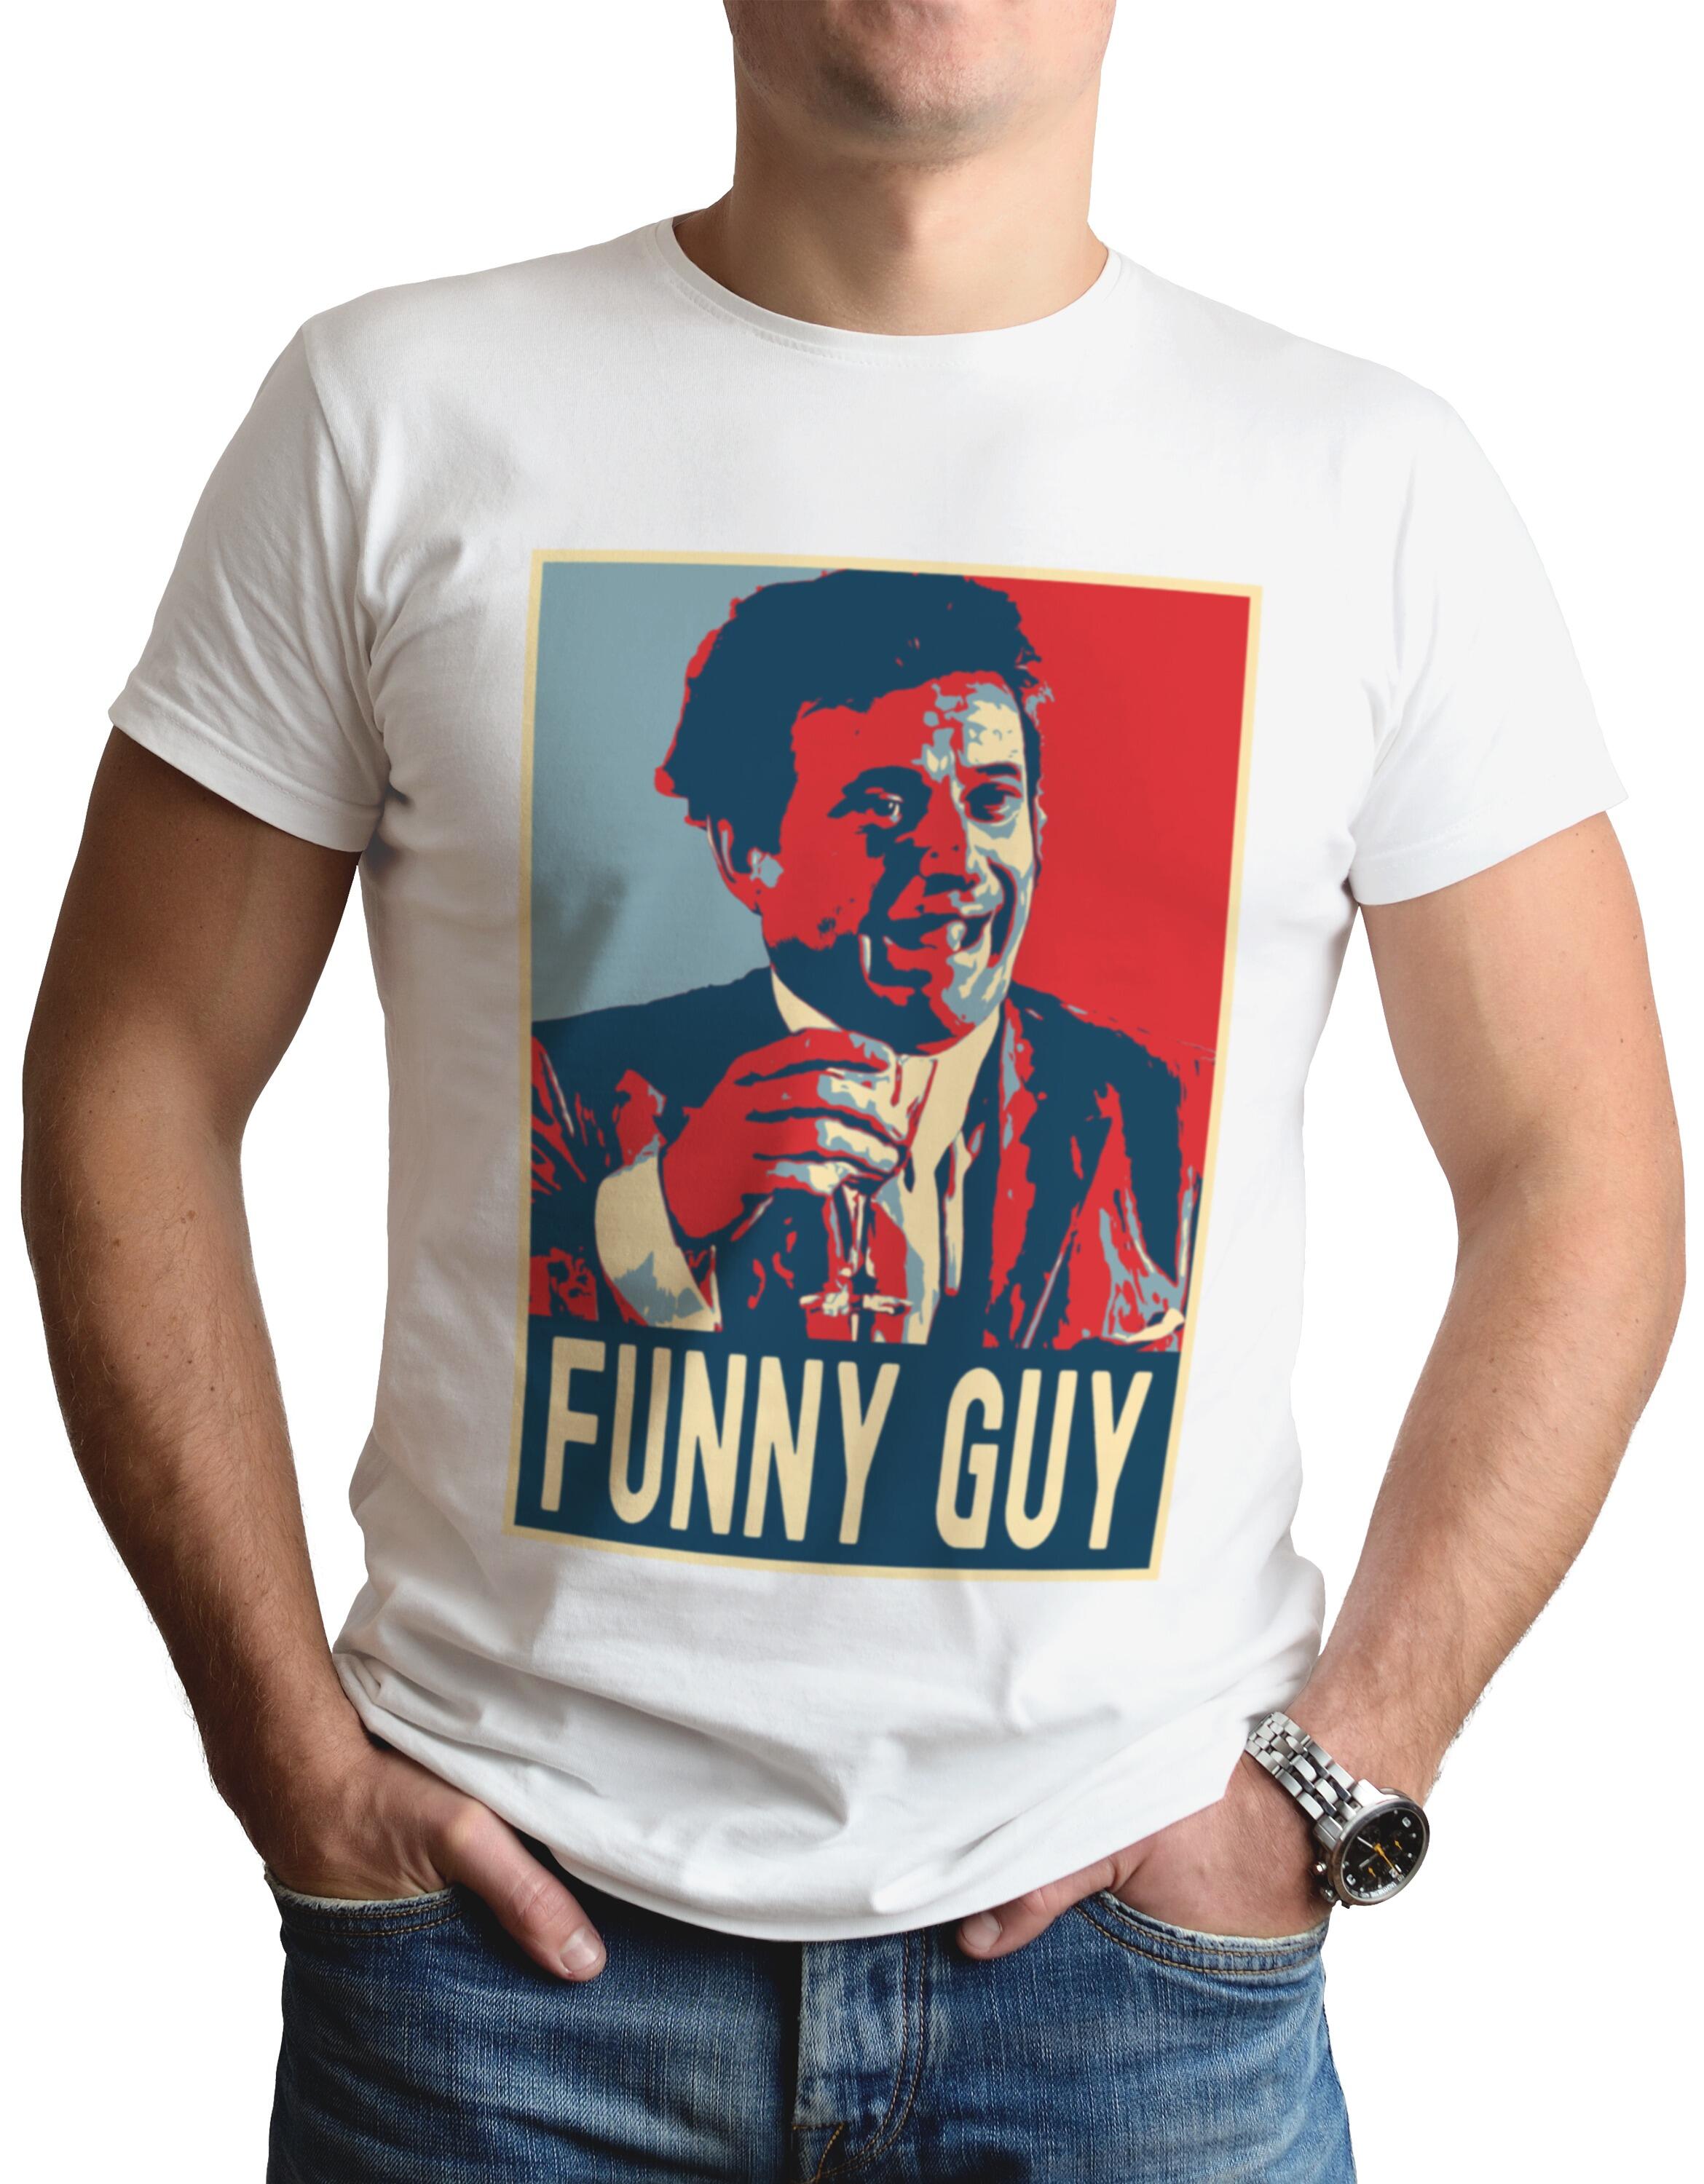 Shop Now: Goodfellas Inspired Men's T-Shirt with Joe Pesci 'Funny Guy'  Print at Screamrock